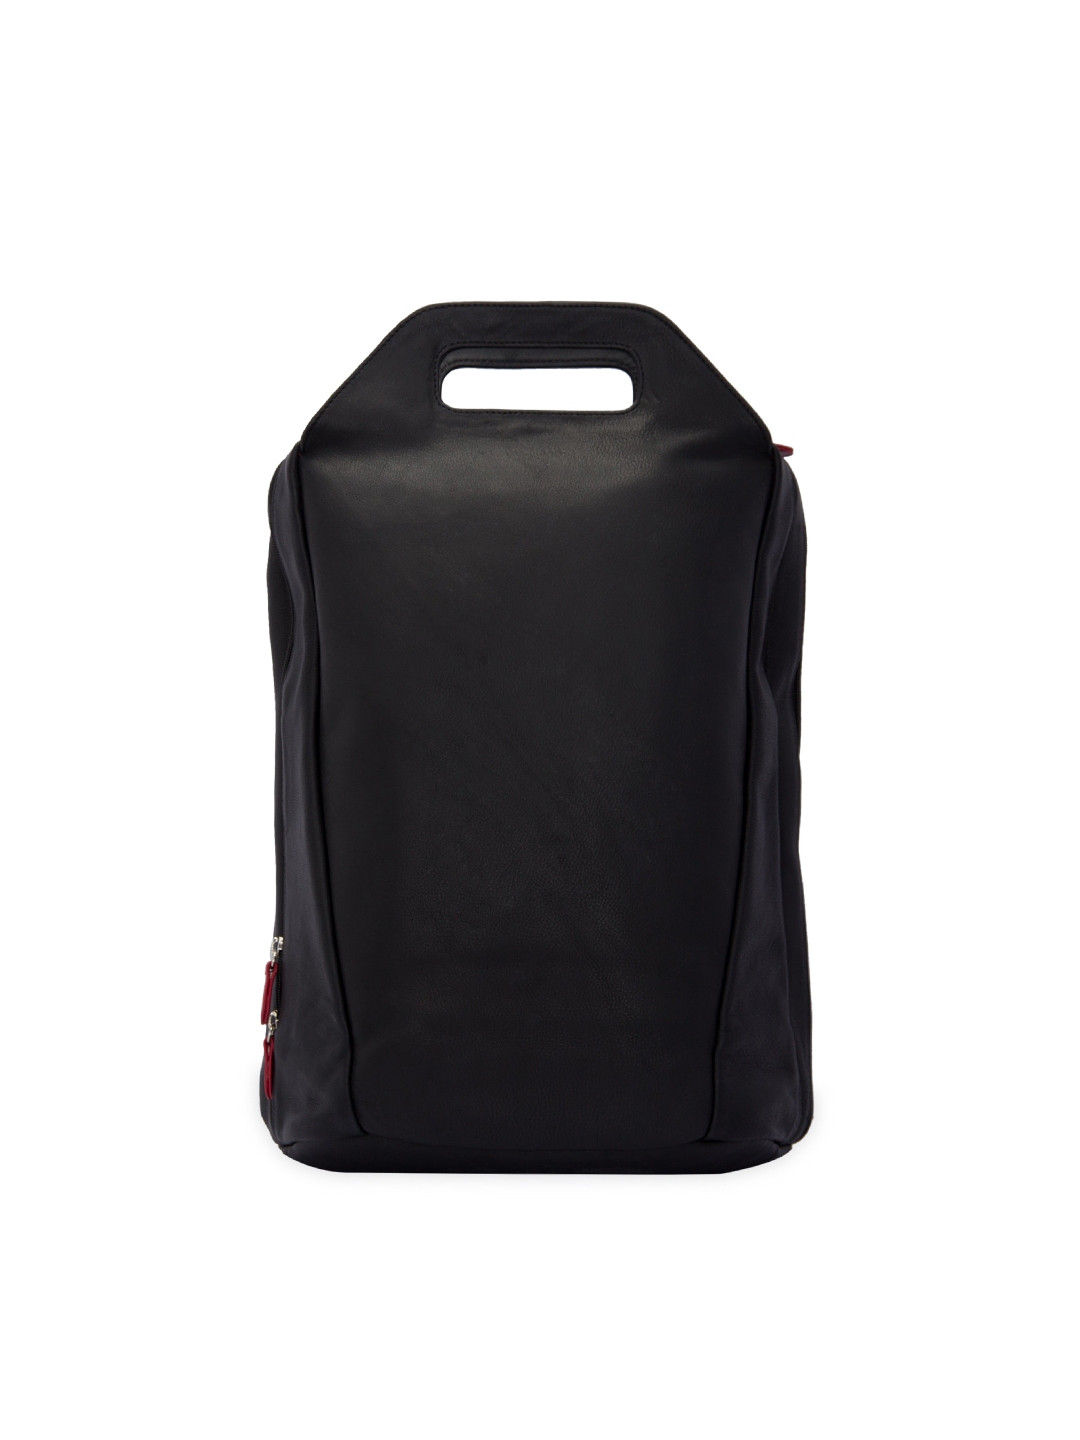 Adamis Bennett Unisex Backpack For Laptop Bag In Genuine Leather (Black) in  Delhi at best price by Premson - Justdial